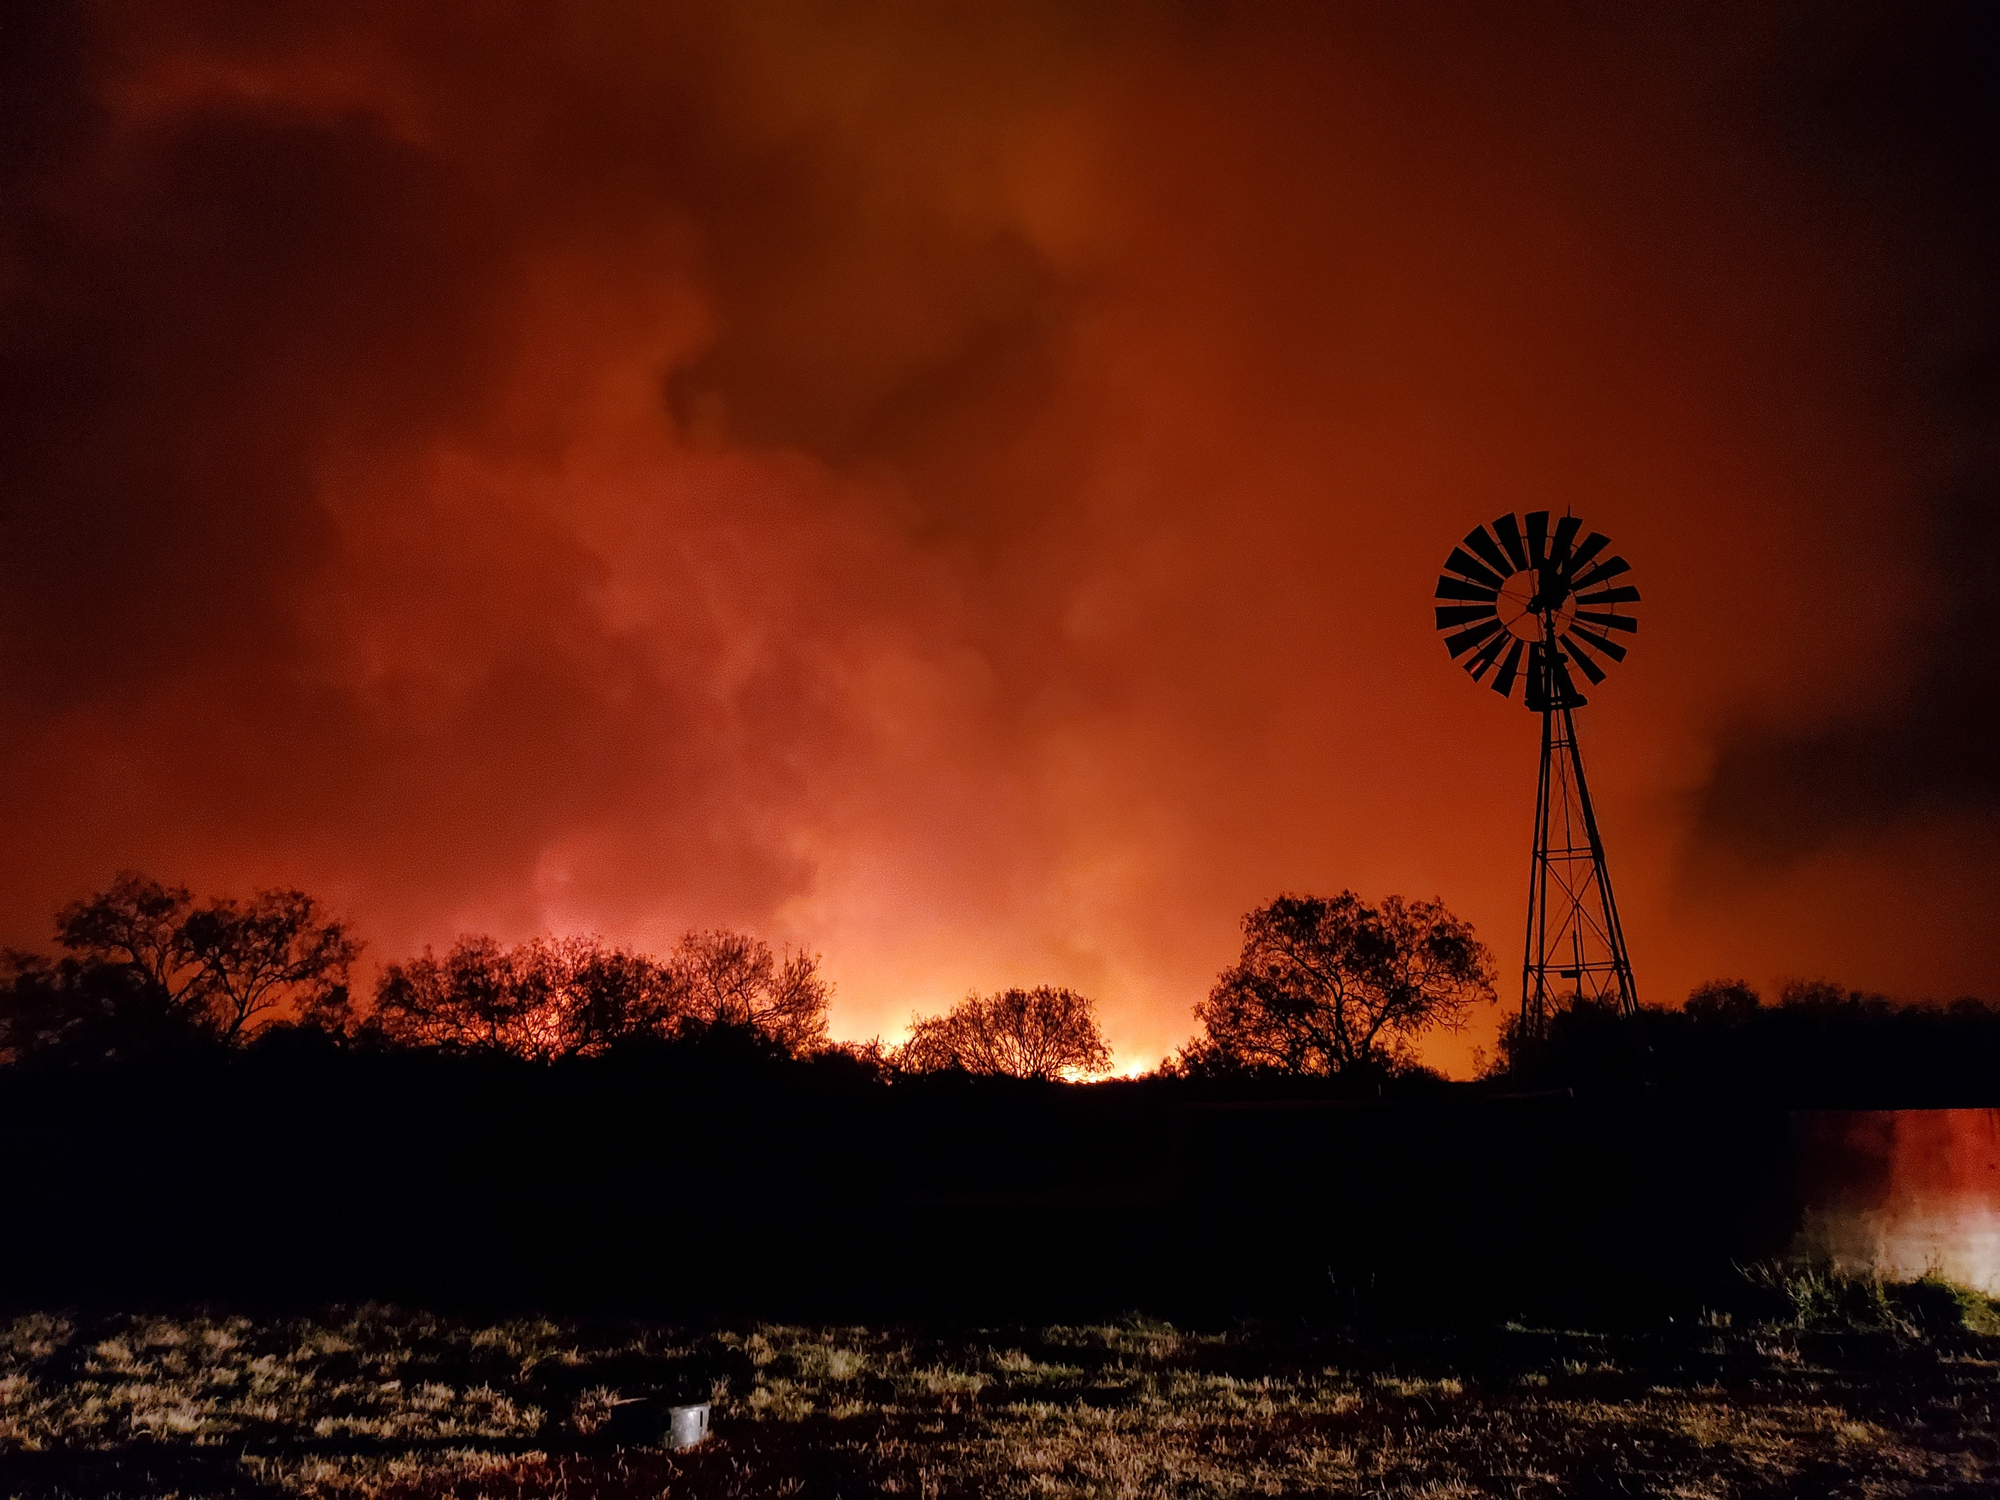 A wildlfire brightens the night sky in Texas, burning though farmland.